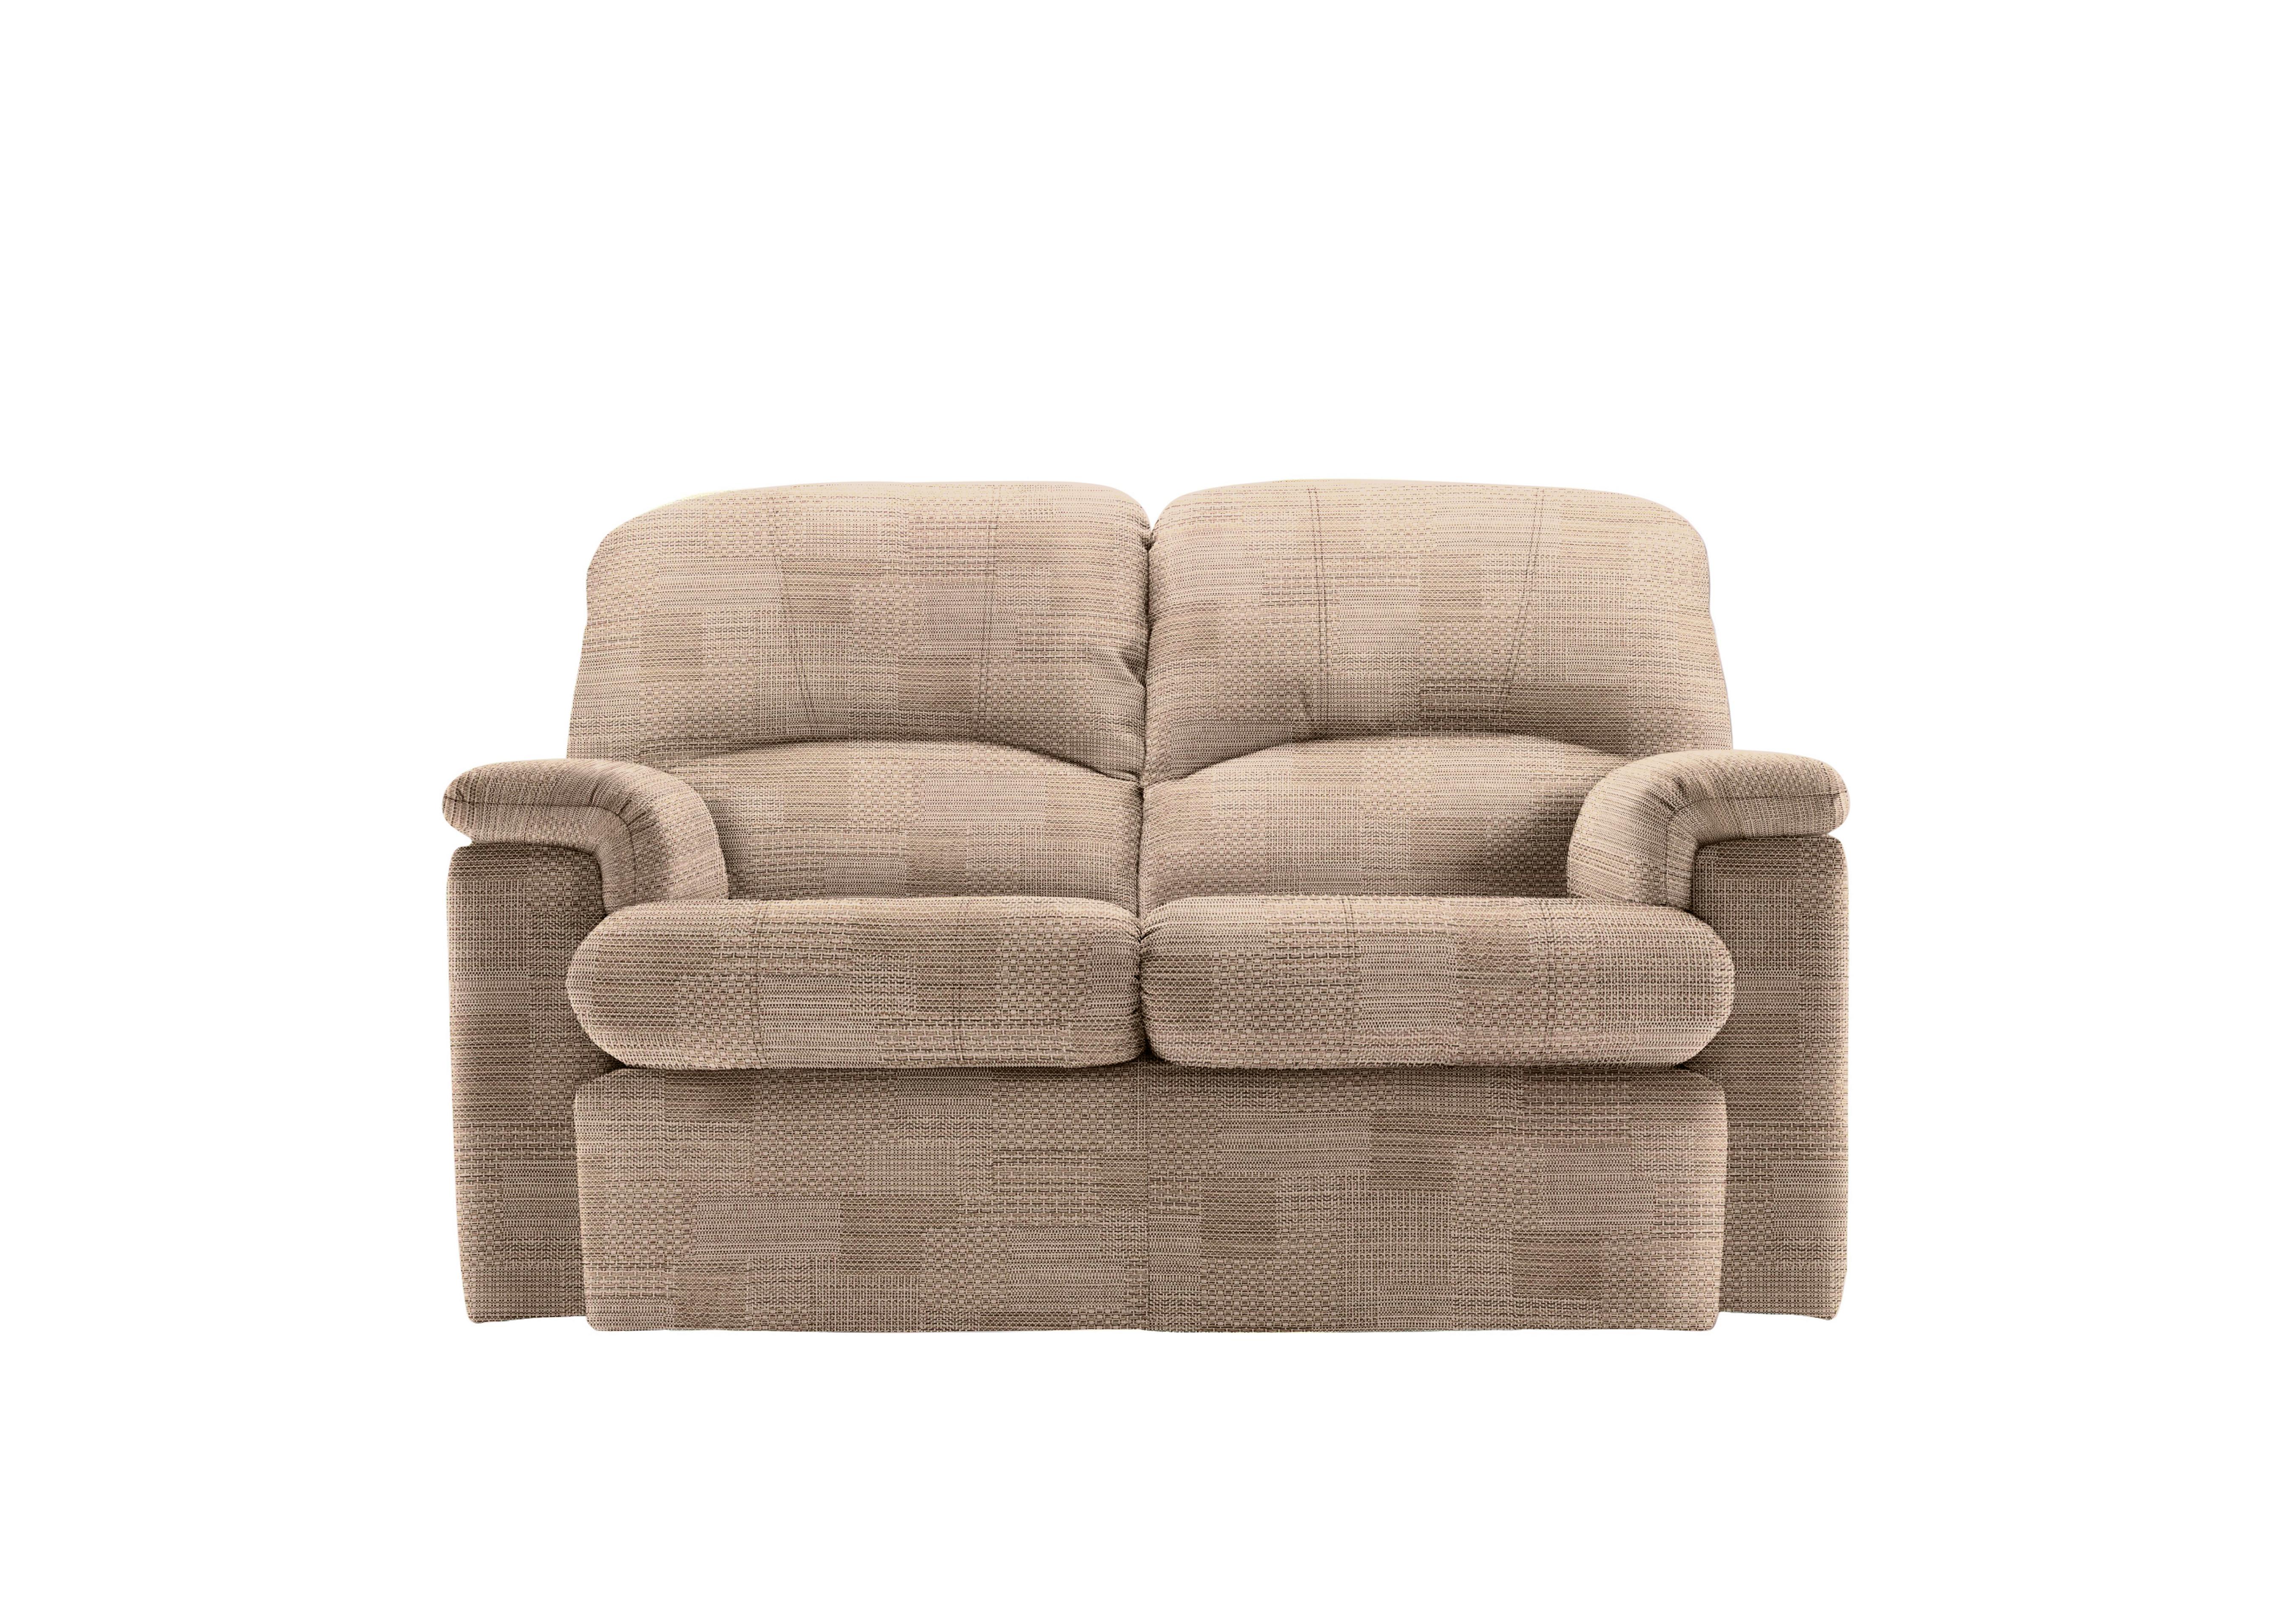 Chloe Small Fabric 2 Seater Sofa in A800 Faro Sand on Furniture Village